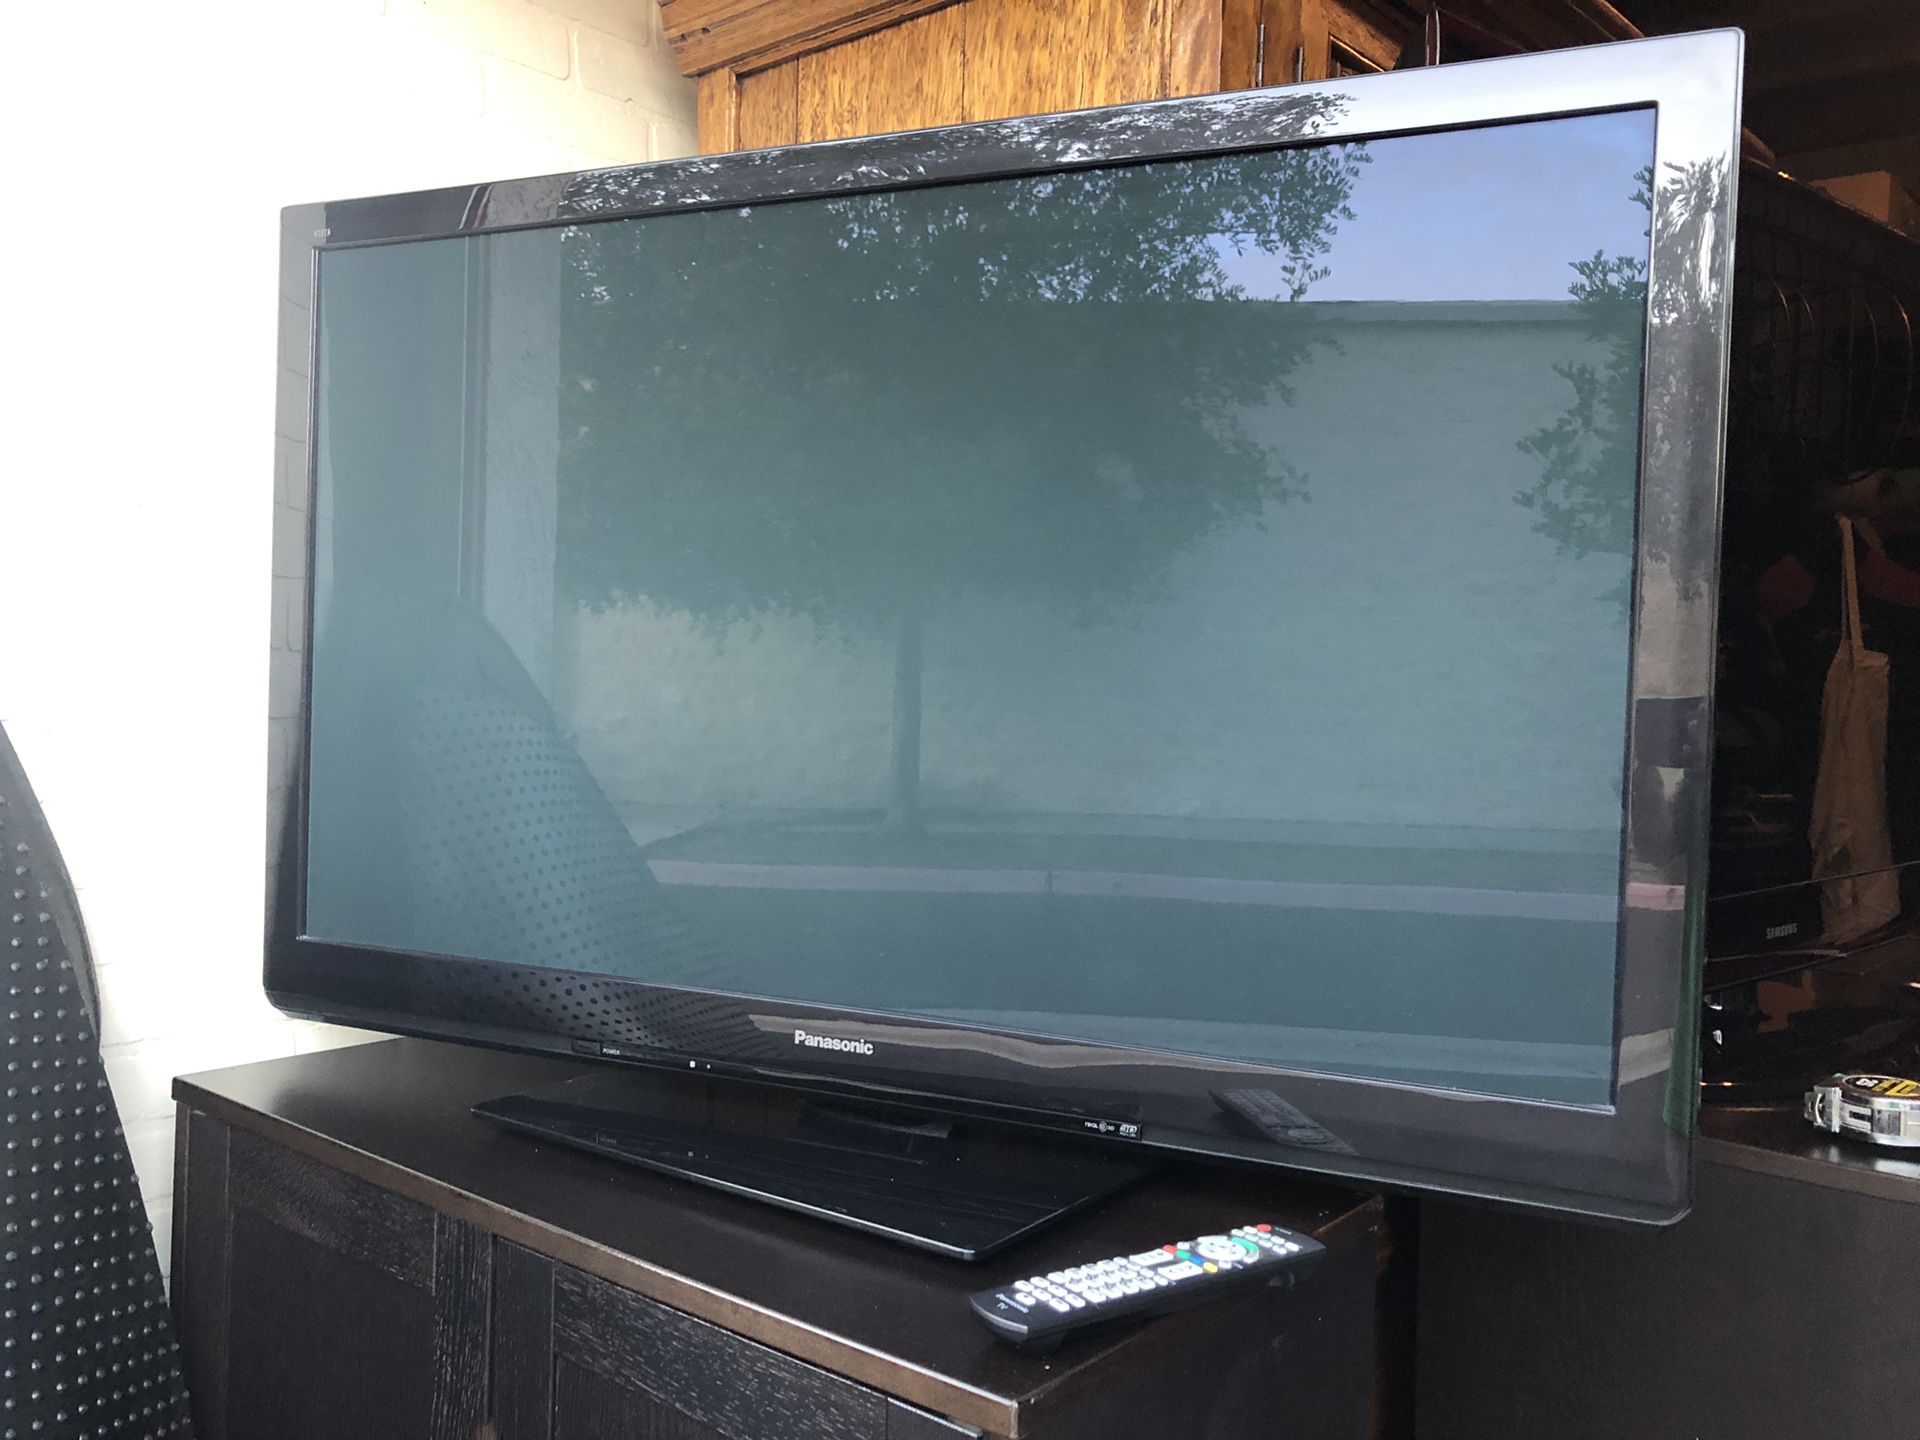 Panasonic 46” Flat Screen Plasma TV